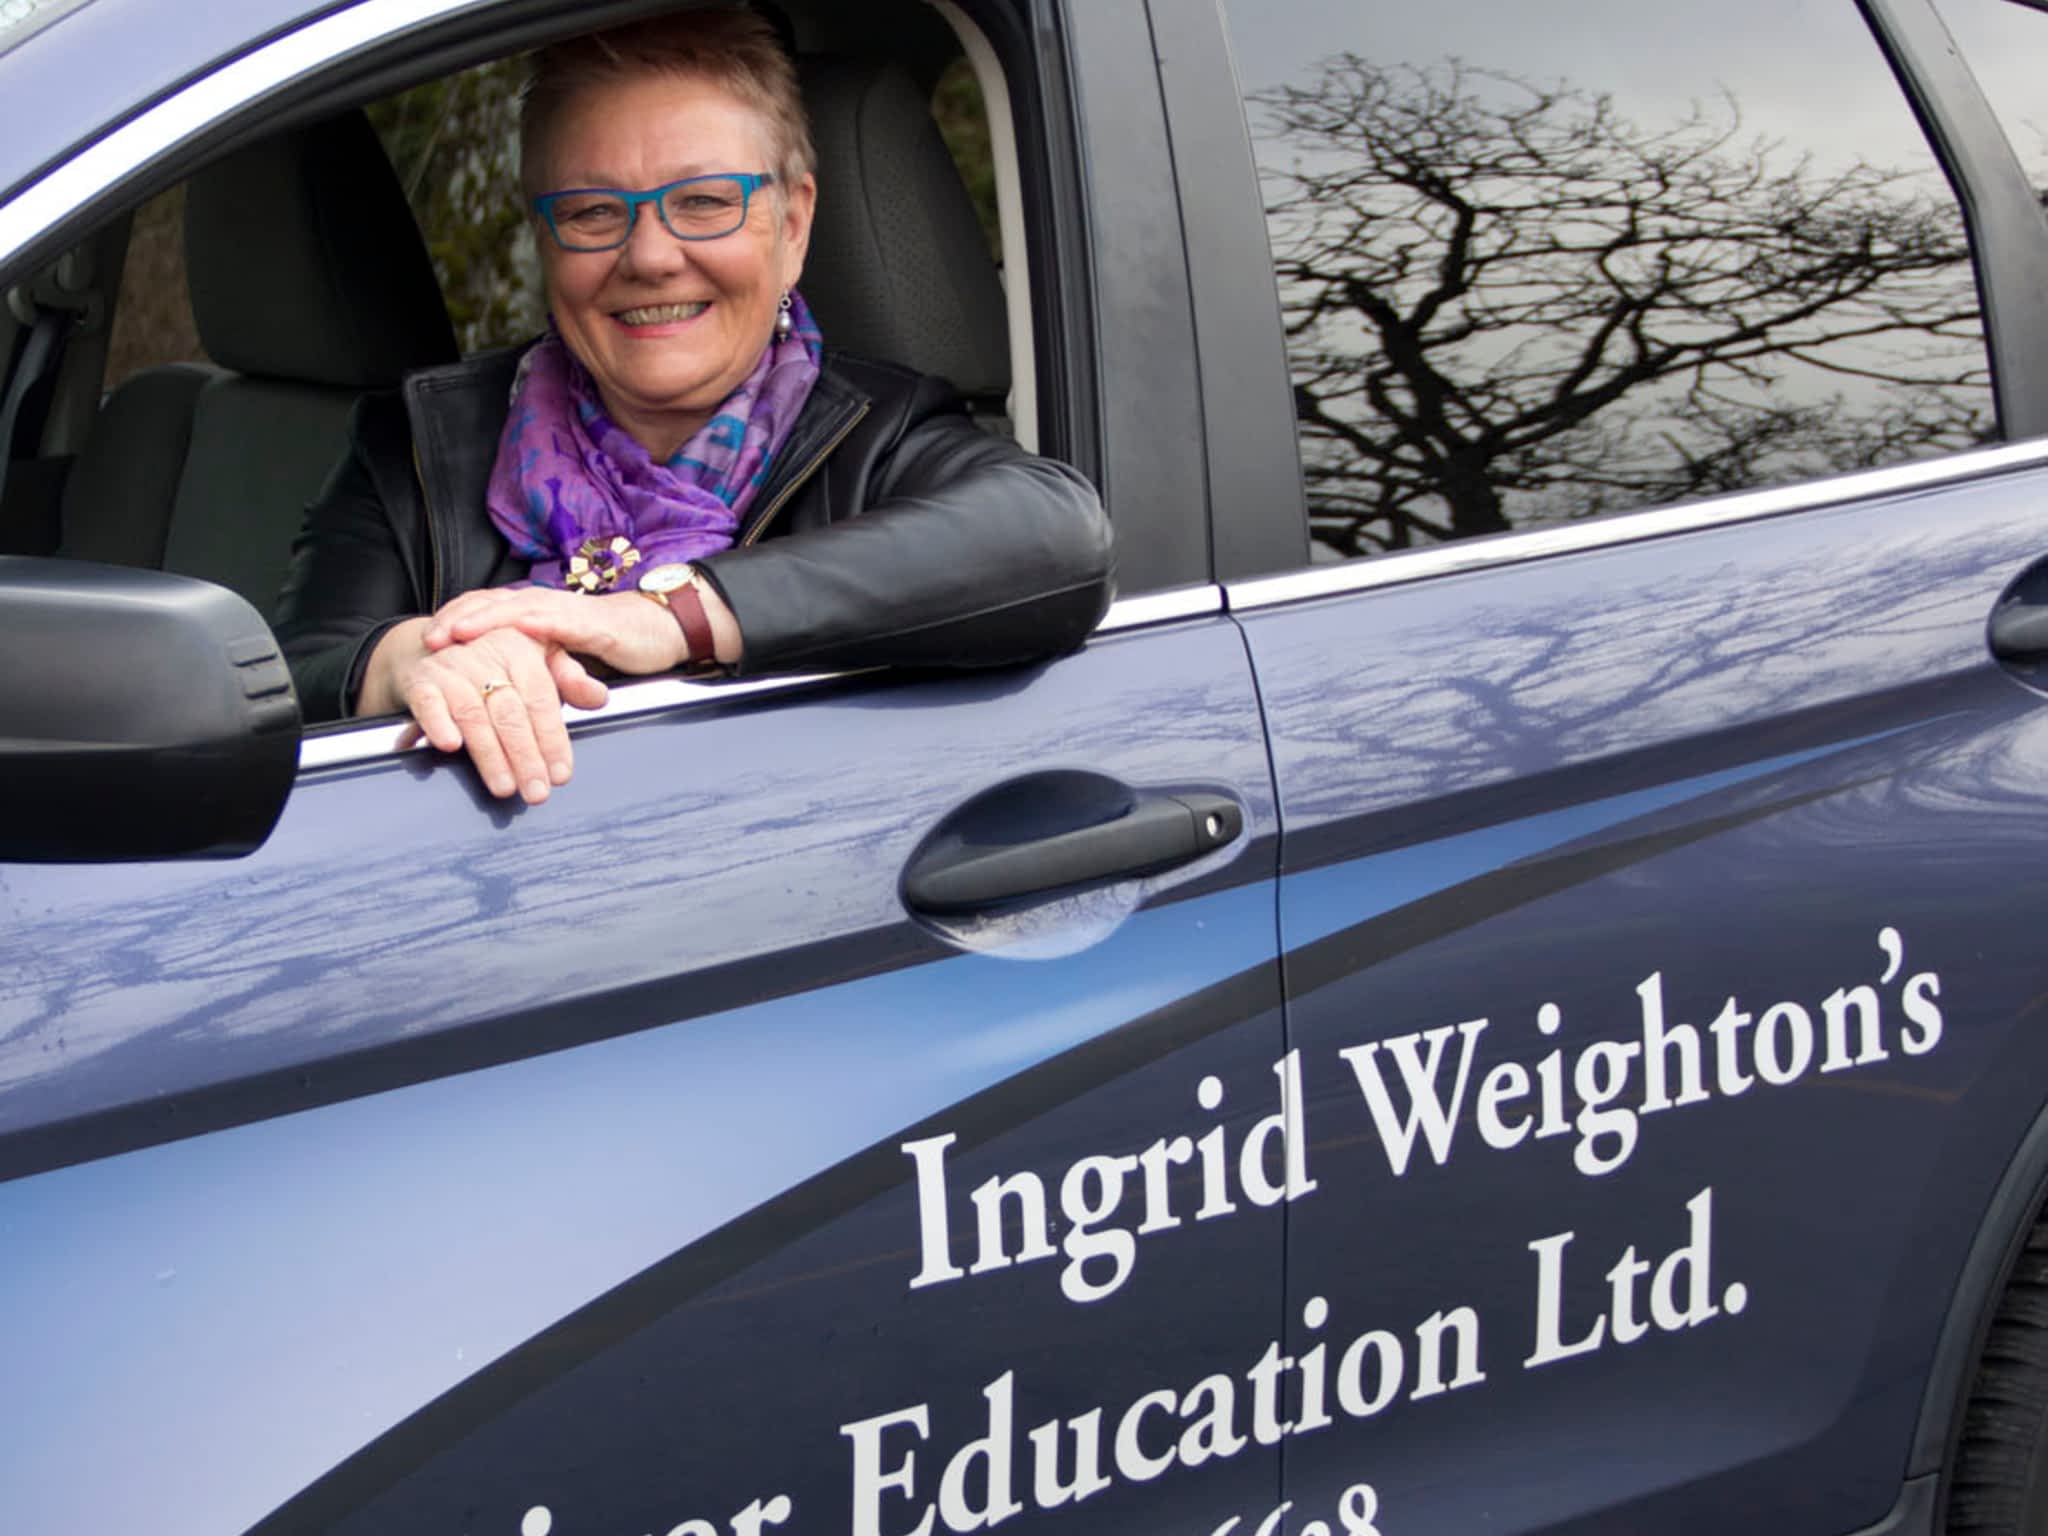 photo Ingrid Weighton's Driver Education Ltd